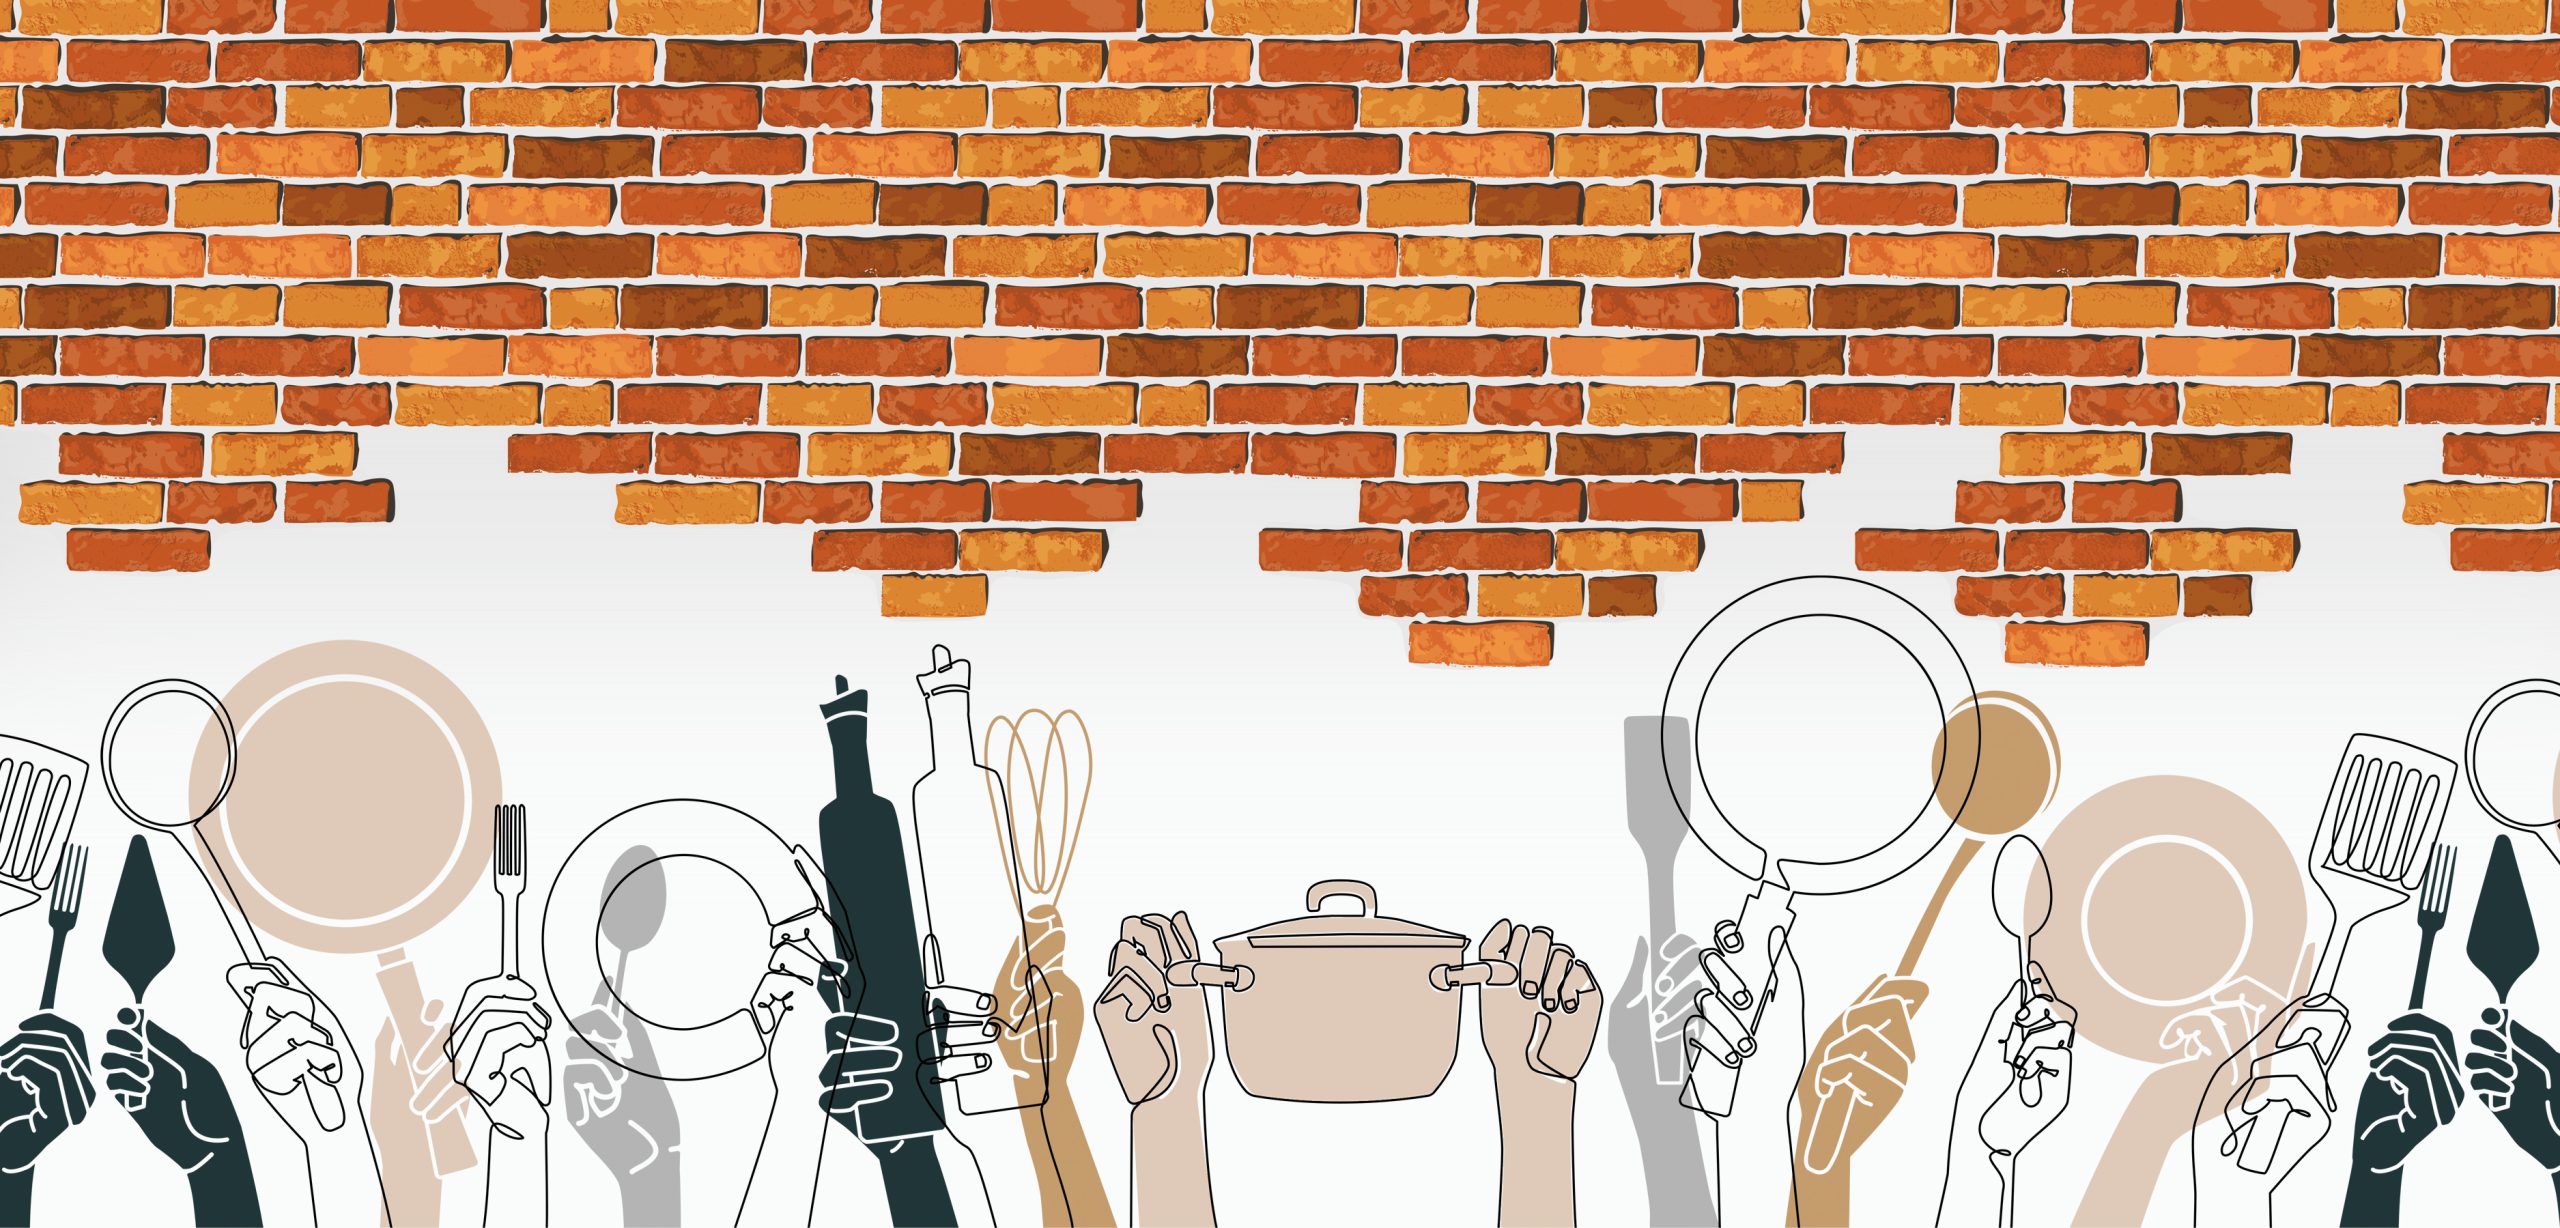 Wallpaper for Restaurant Wall - Brick Wall